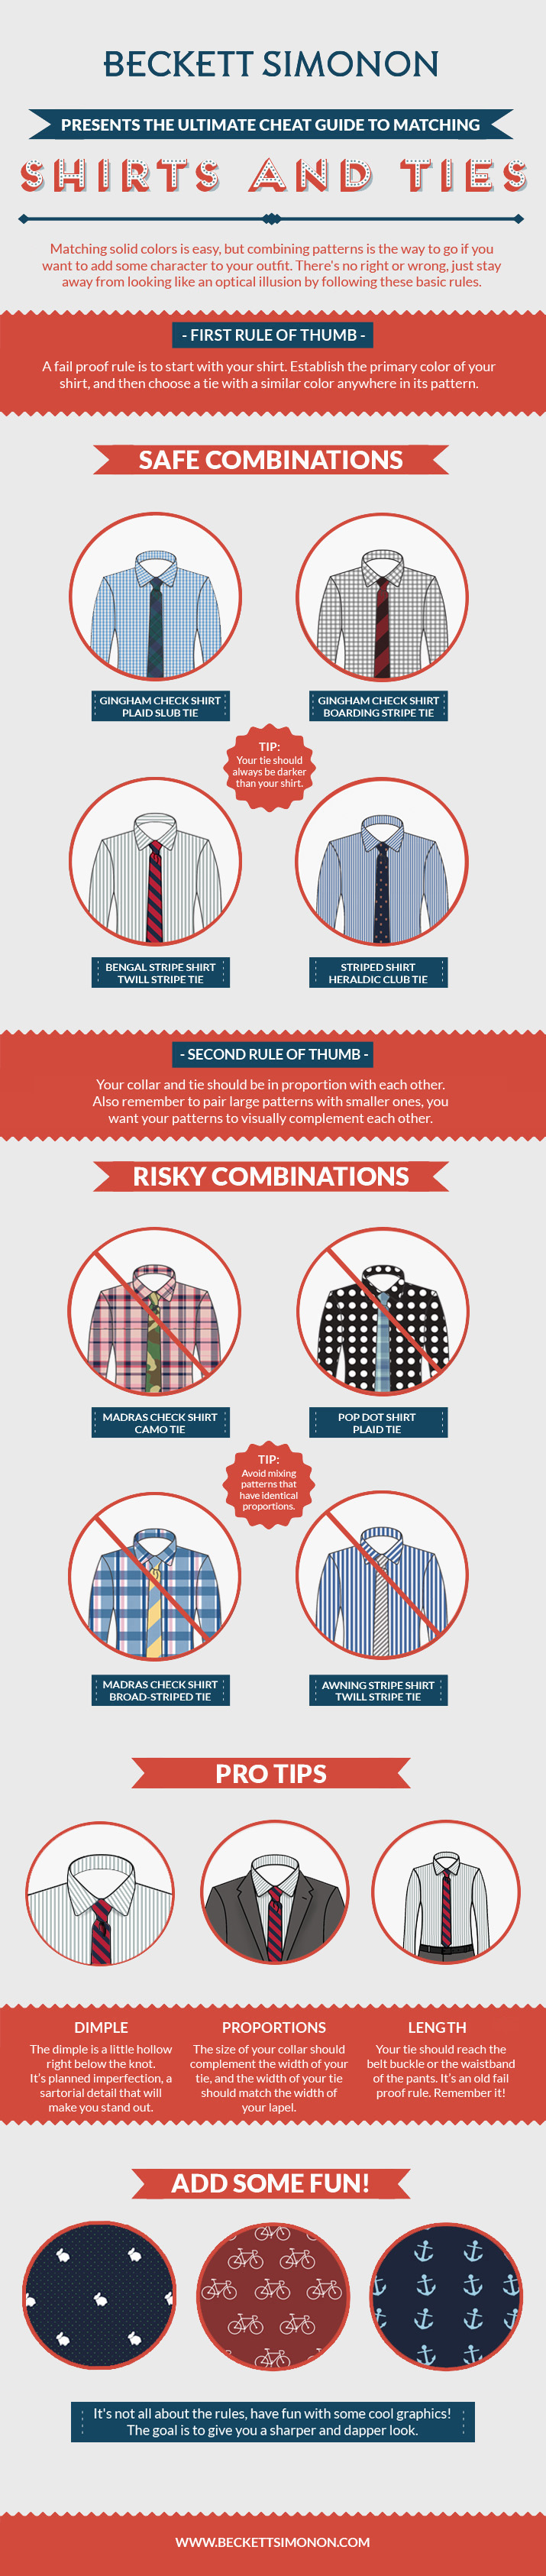 beckett_simonon_shirts_and_ties_infographic_1.JPG